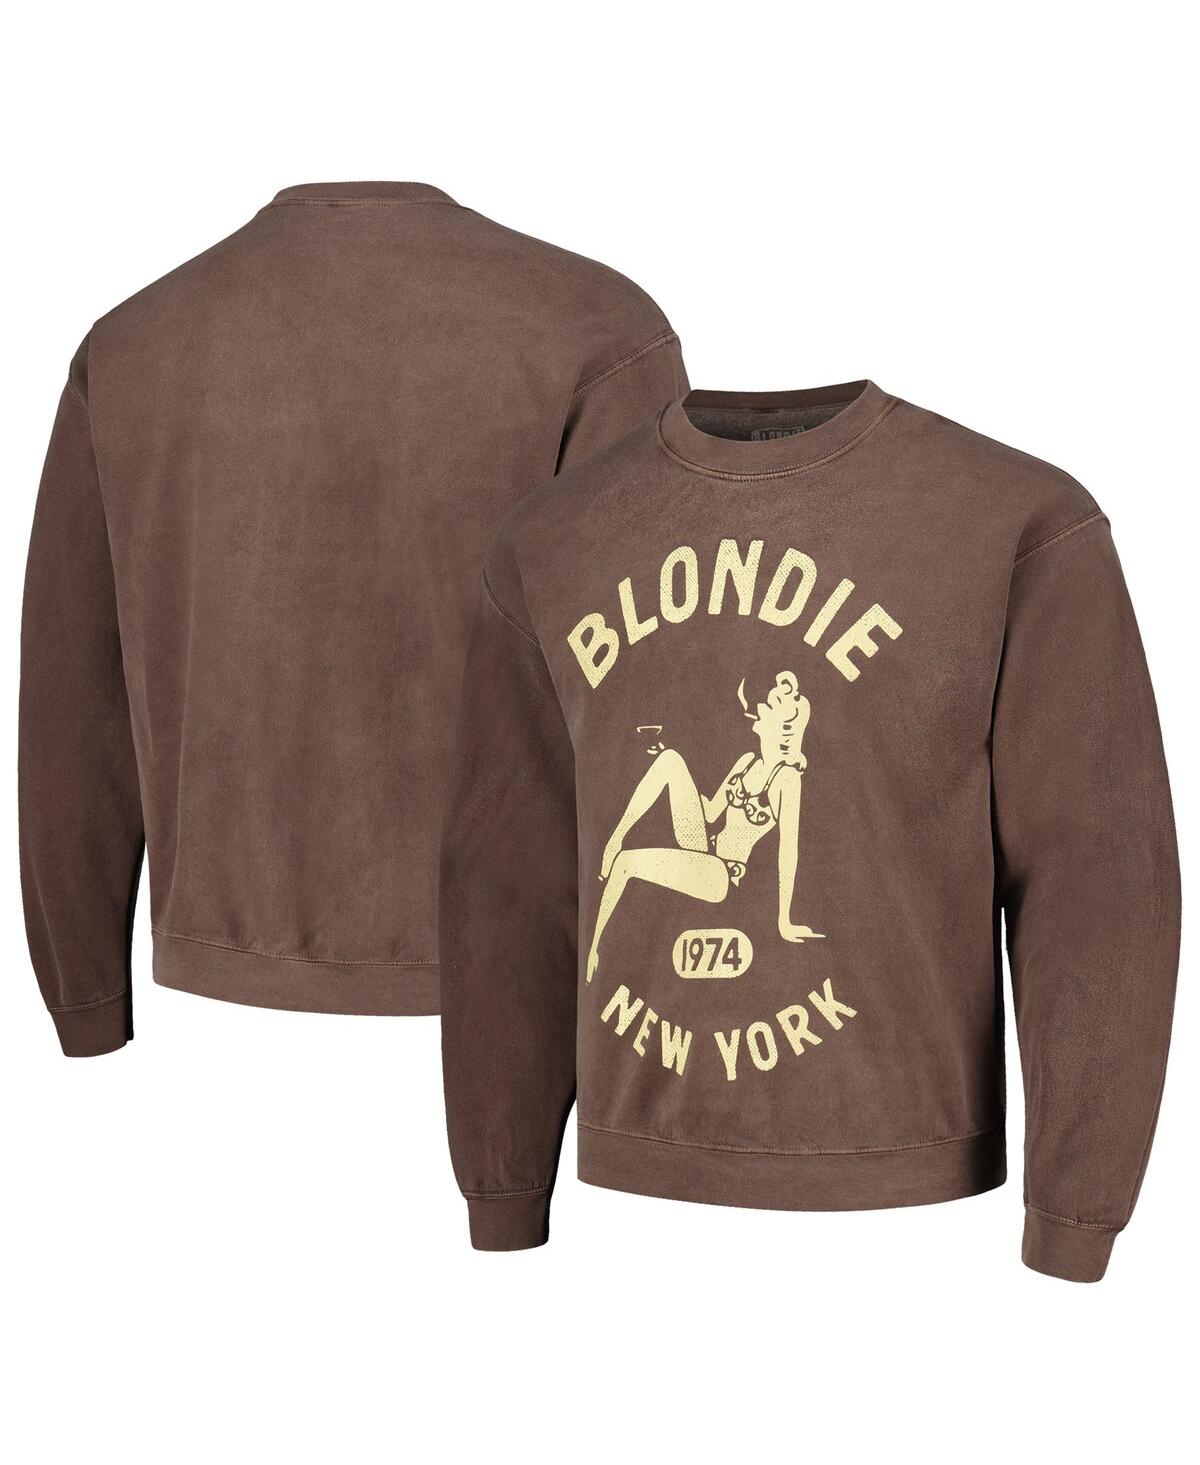 Philcos Men's Brown Distressed Blondie New York Pullover Sweatshirt